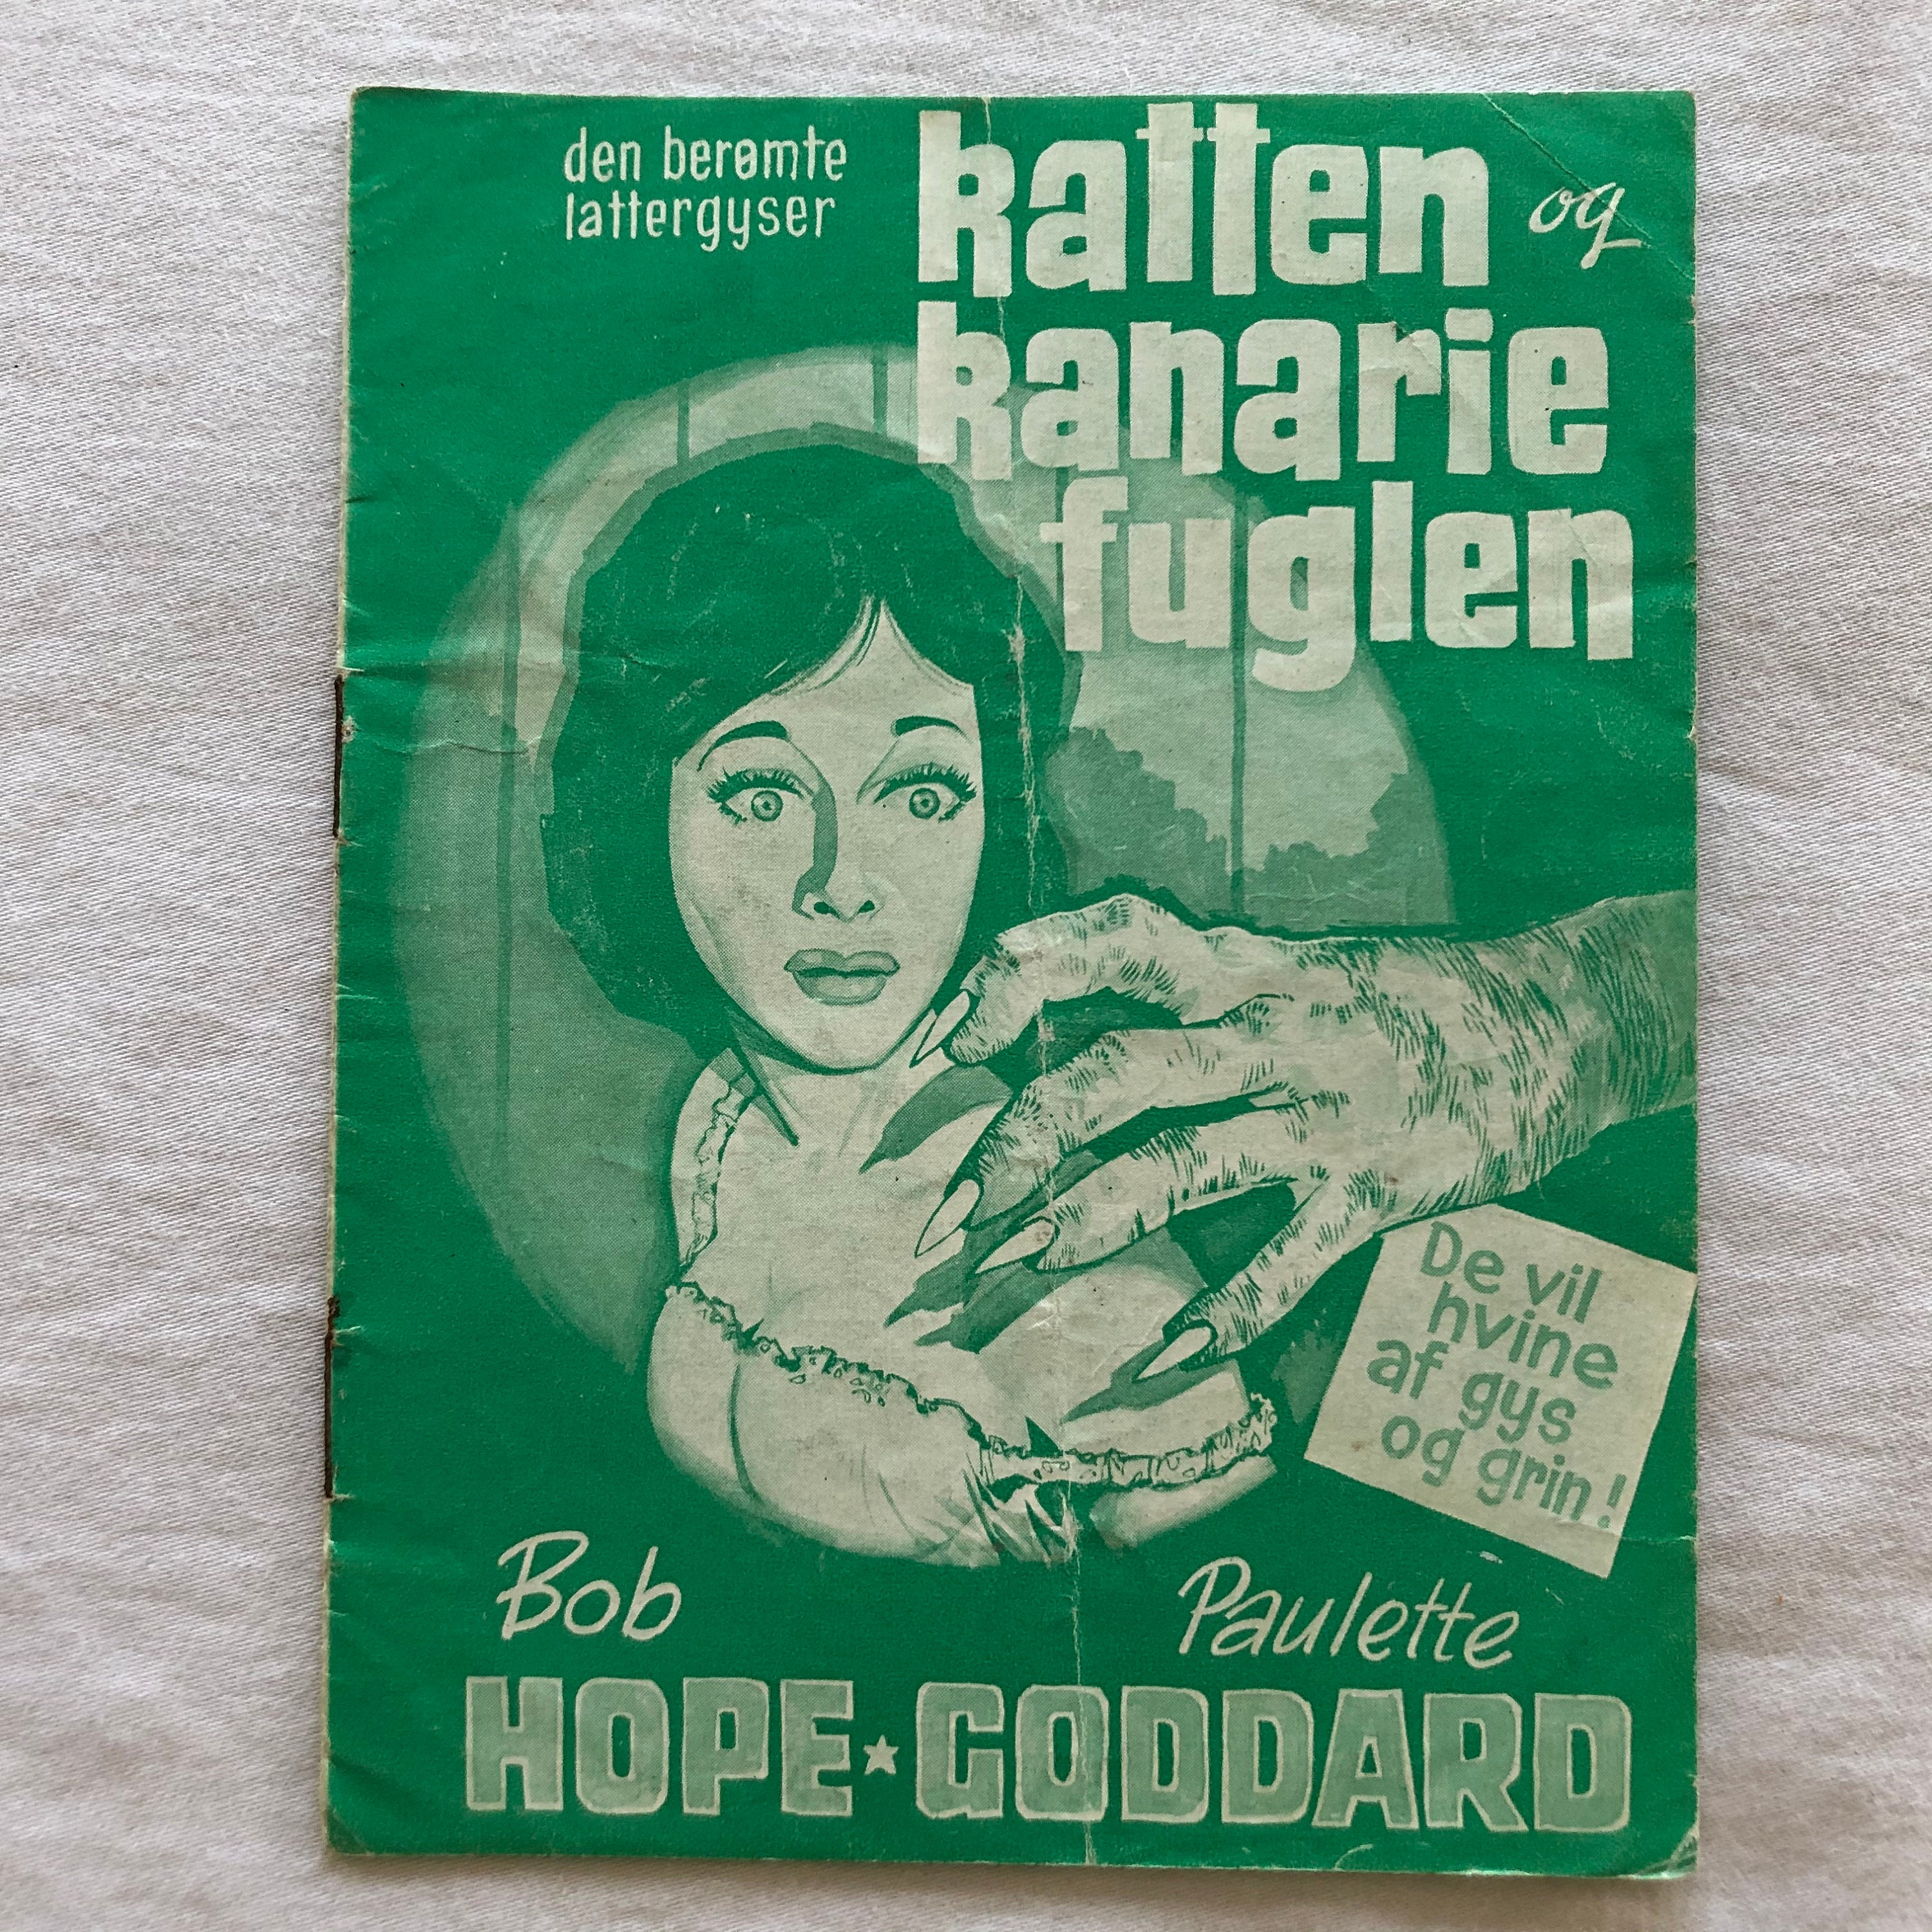 The Ghost Breakers Bob Hope Paulette Goddard Richard Carlson 1940 Collectible Memorabilia Danish Movie Theater Souvenir Original Programme